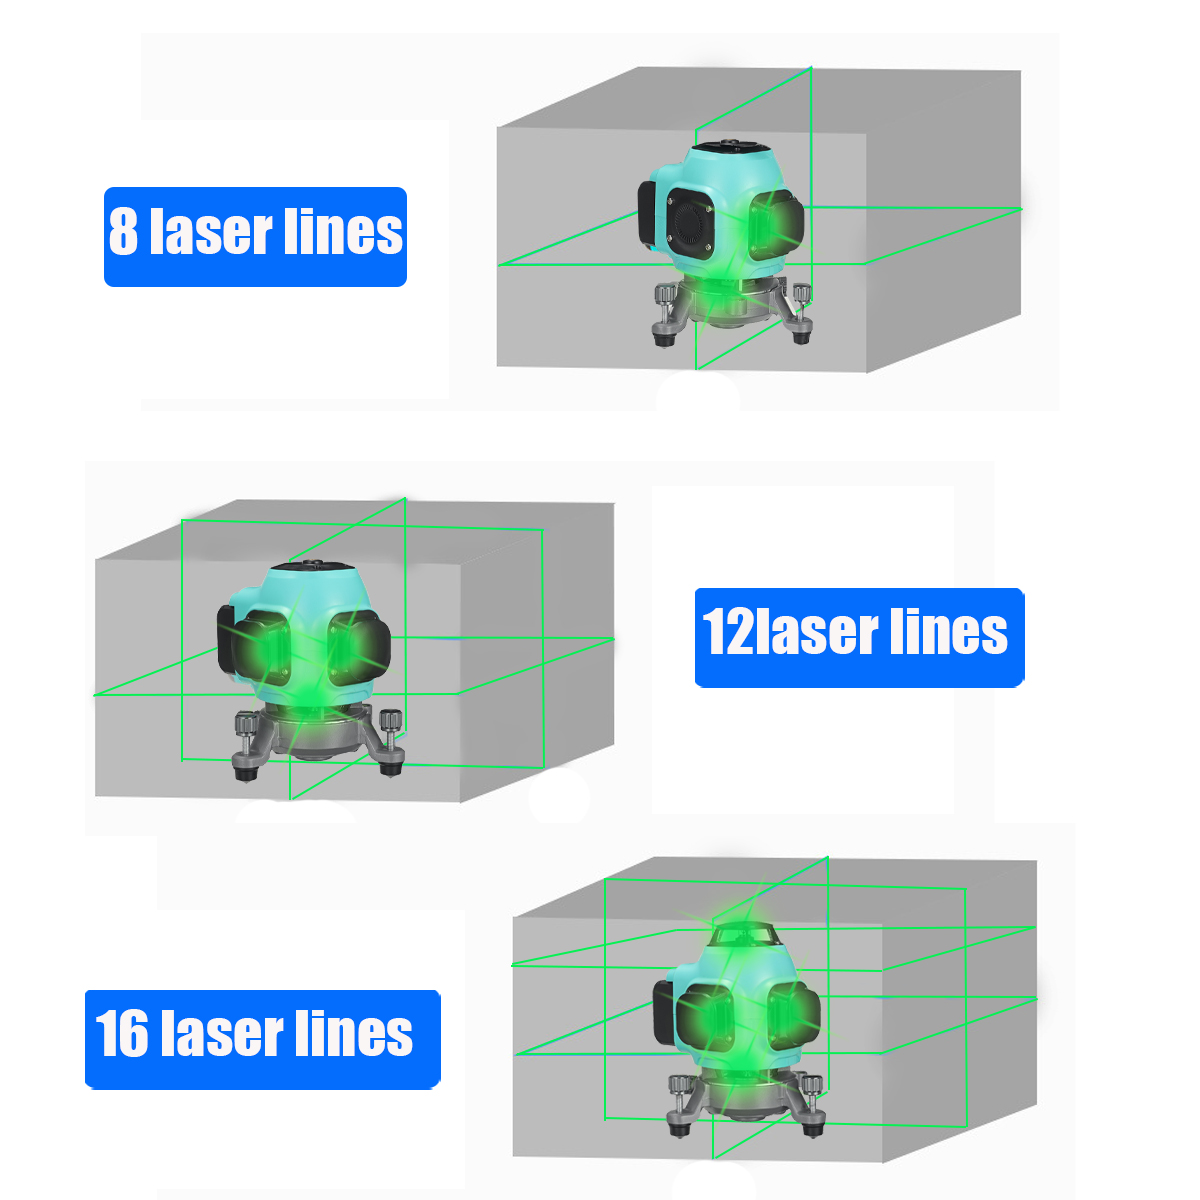 81216-Line-360deg-Rotary-Leveling-Cross-Measure-Tool-Green-Laser-Level-Tool-Kit-with-1pcs-Battery-1914853-4